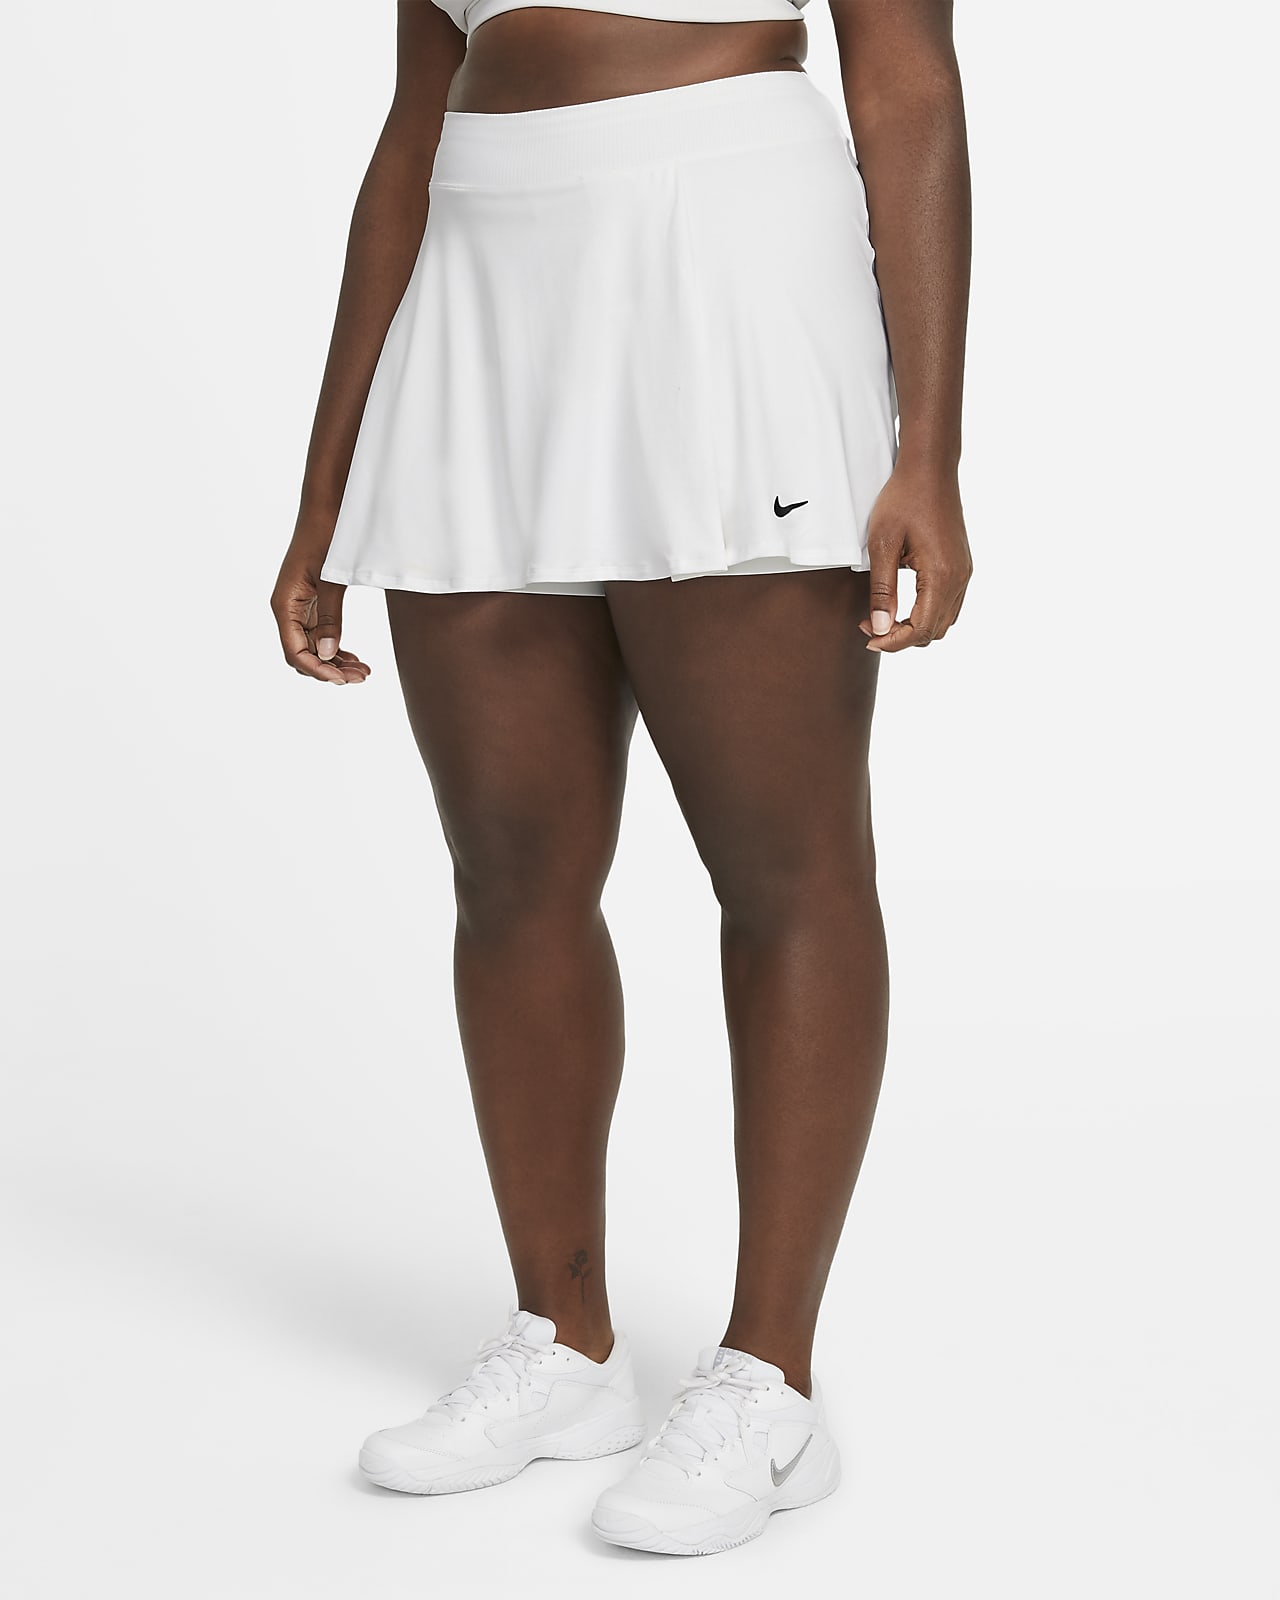 white nike tennis skirt victory